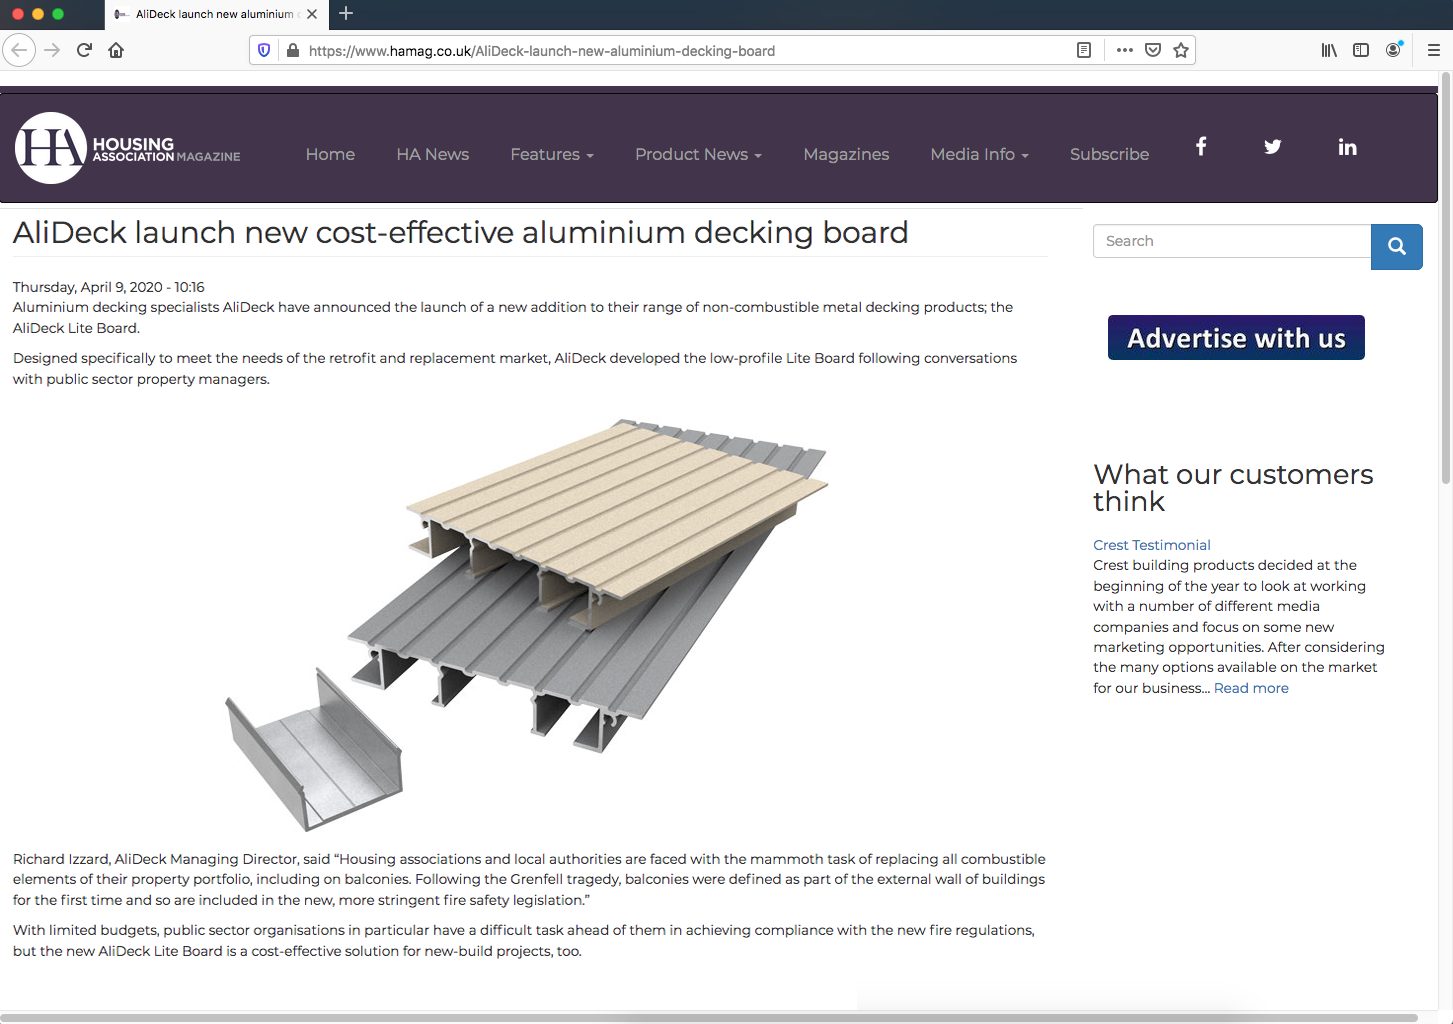 AliDeck's newest aluminium metal decking board is featured in Housing Association Magazine